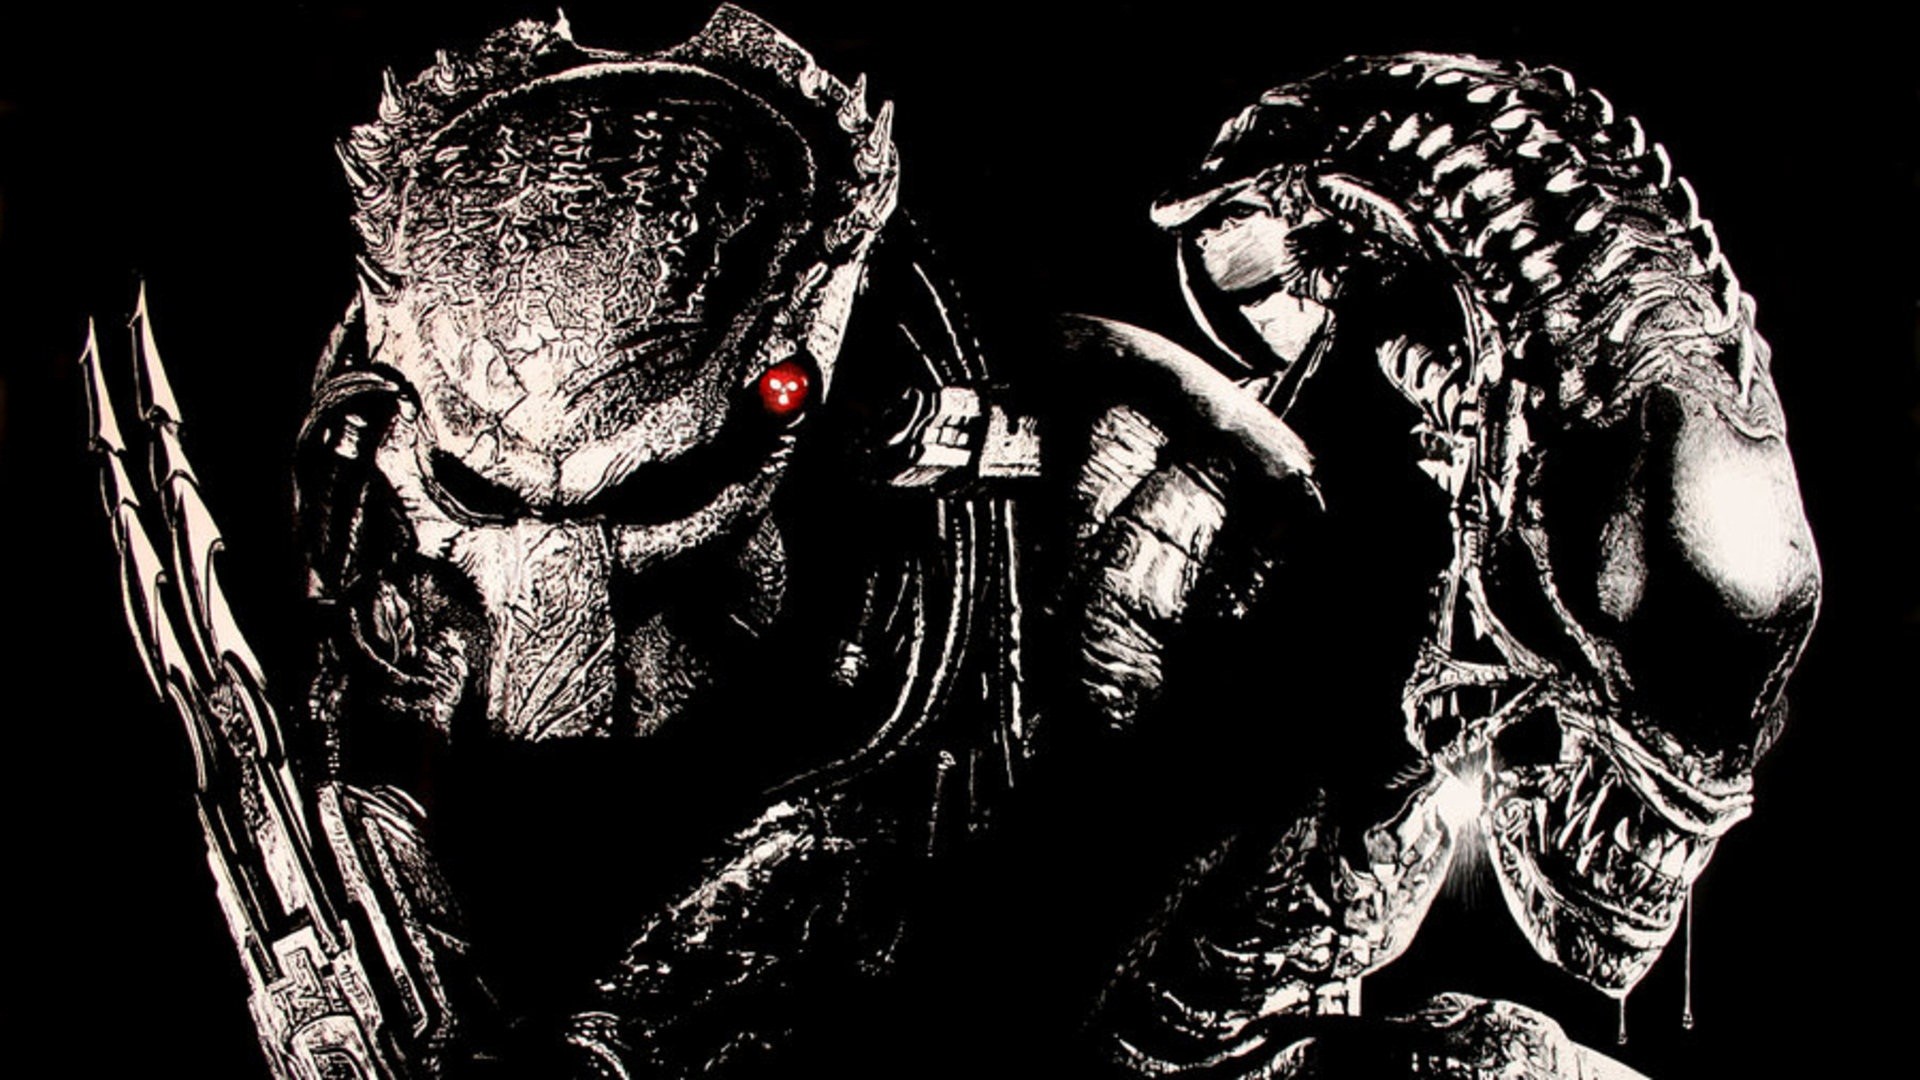 Wallpaper Of Alien Vs Predator You Are Ing